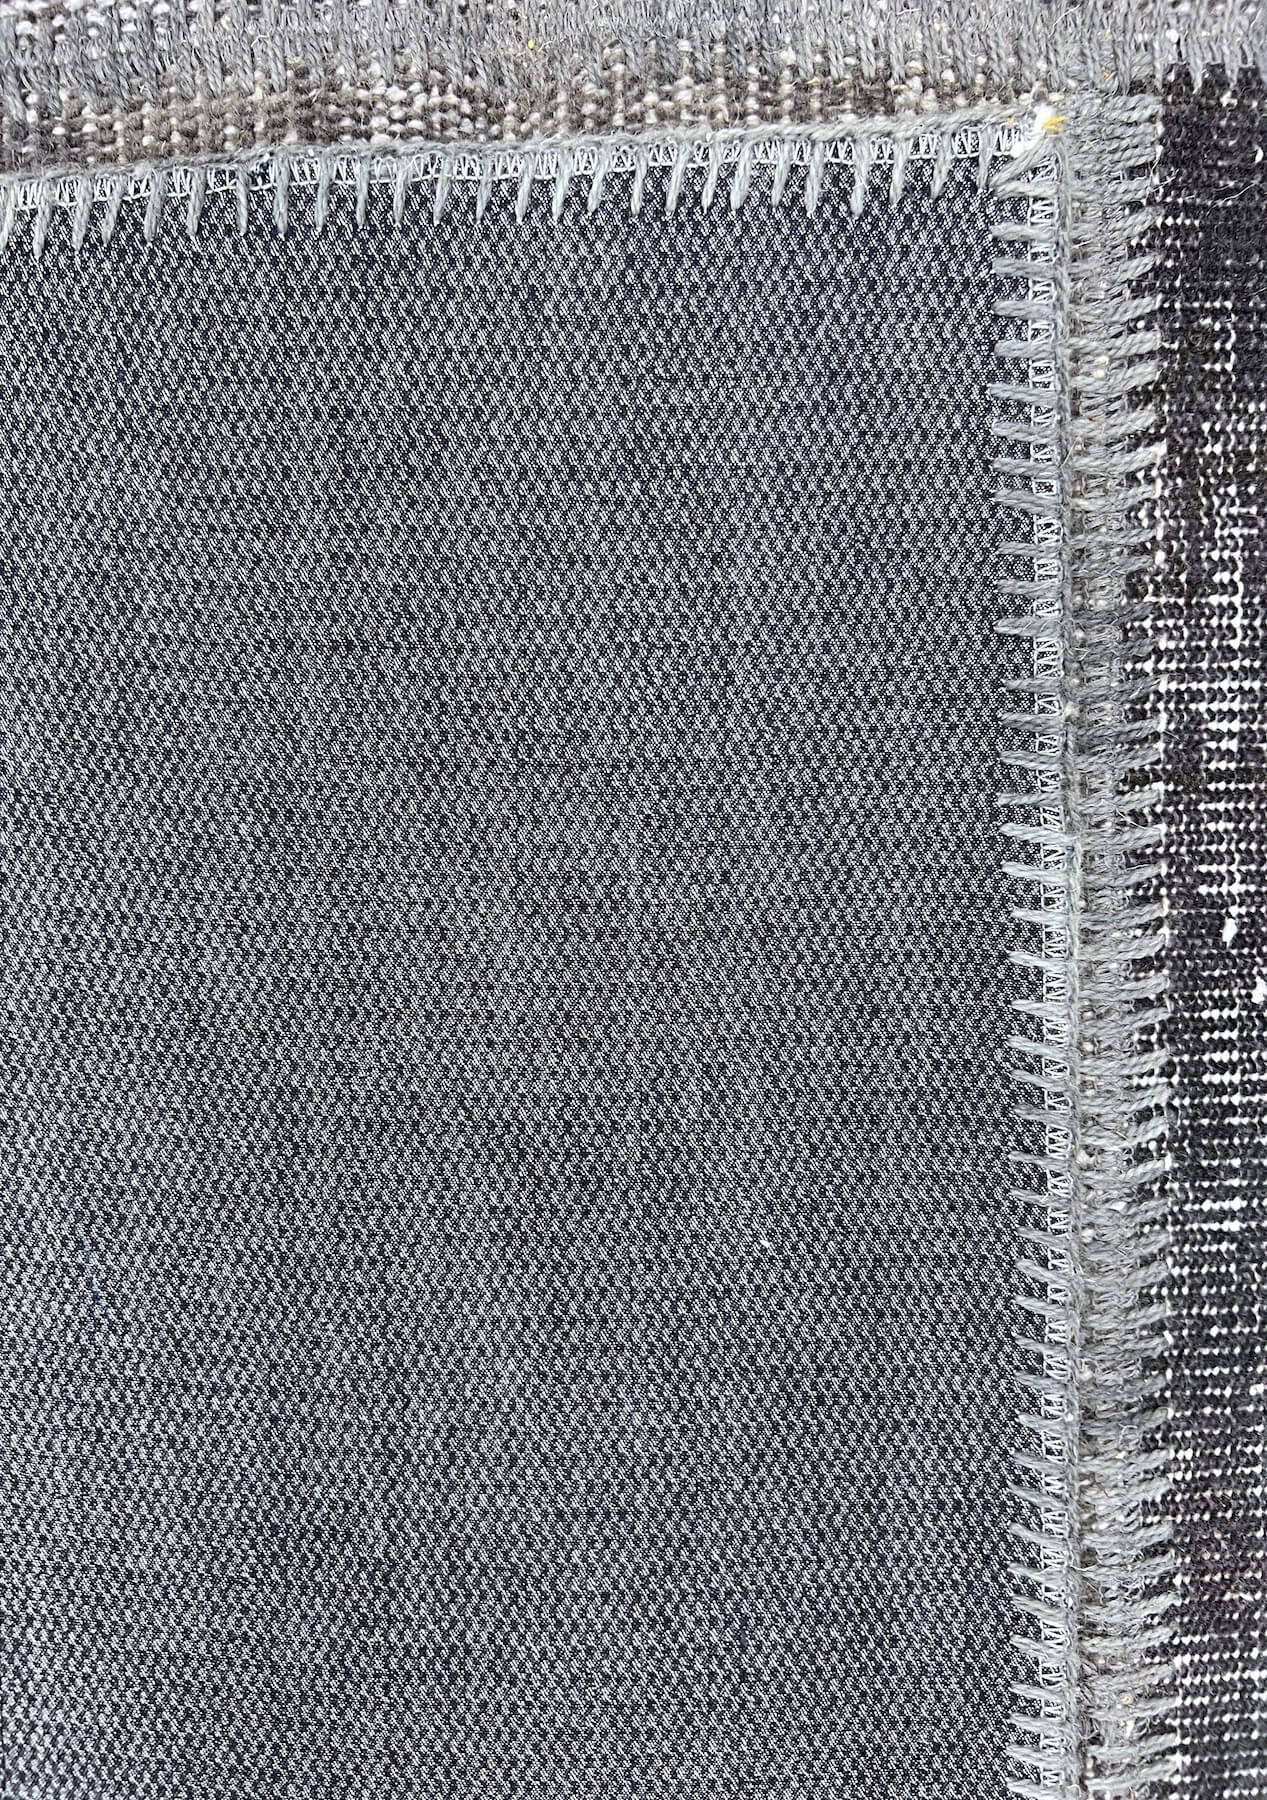 Keyla - Vintage Gray Patchwork Rug - kudenrugs